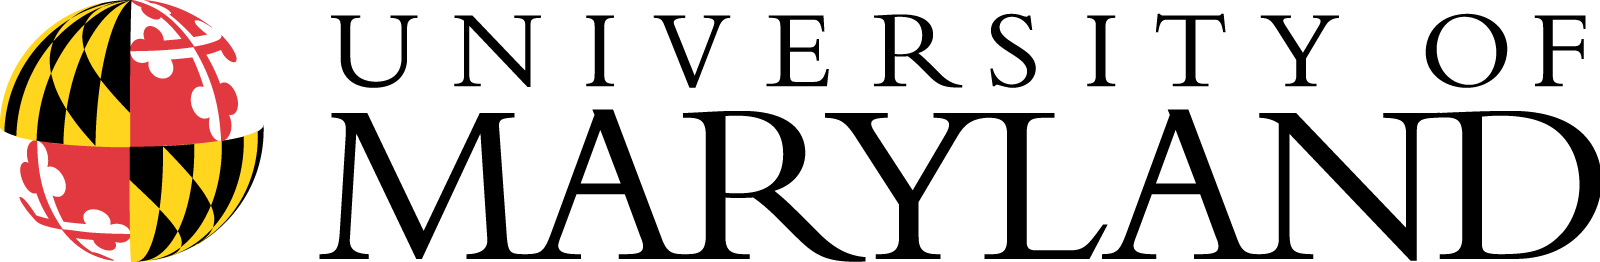 umd-logo